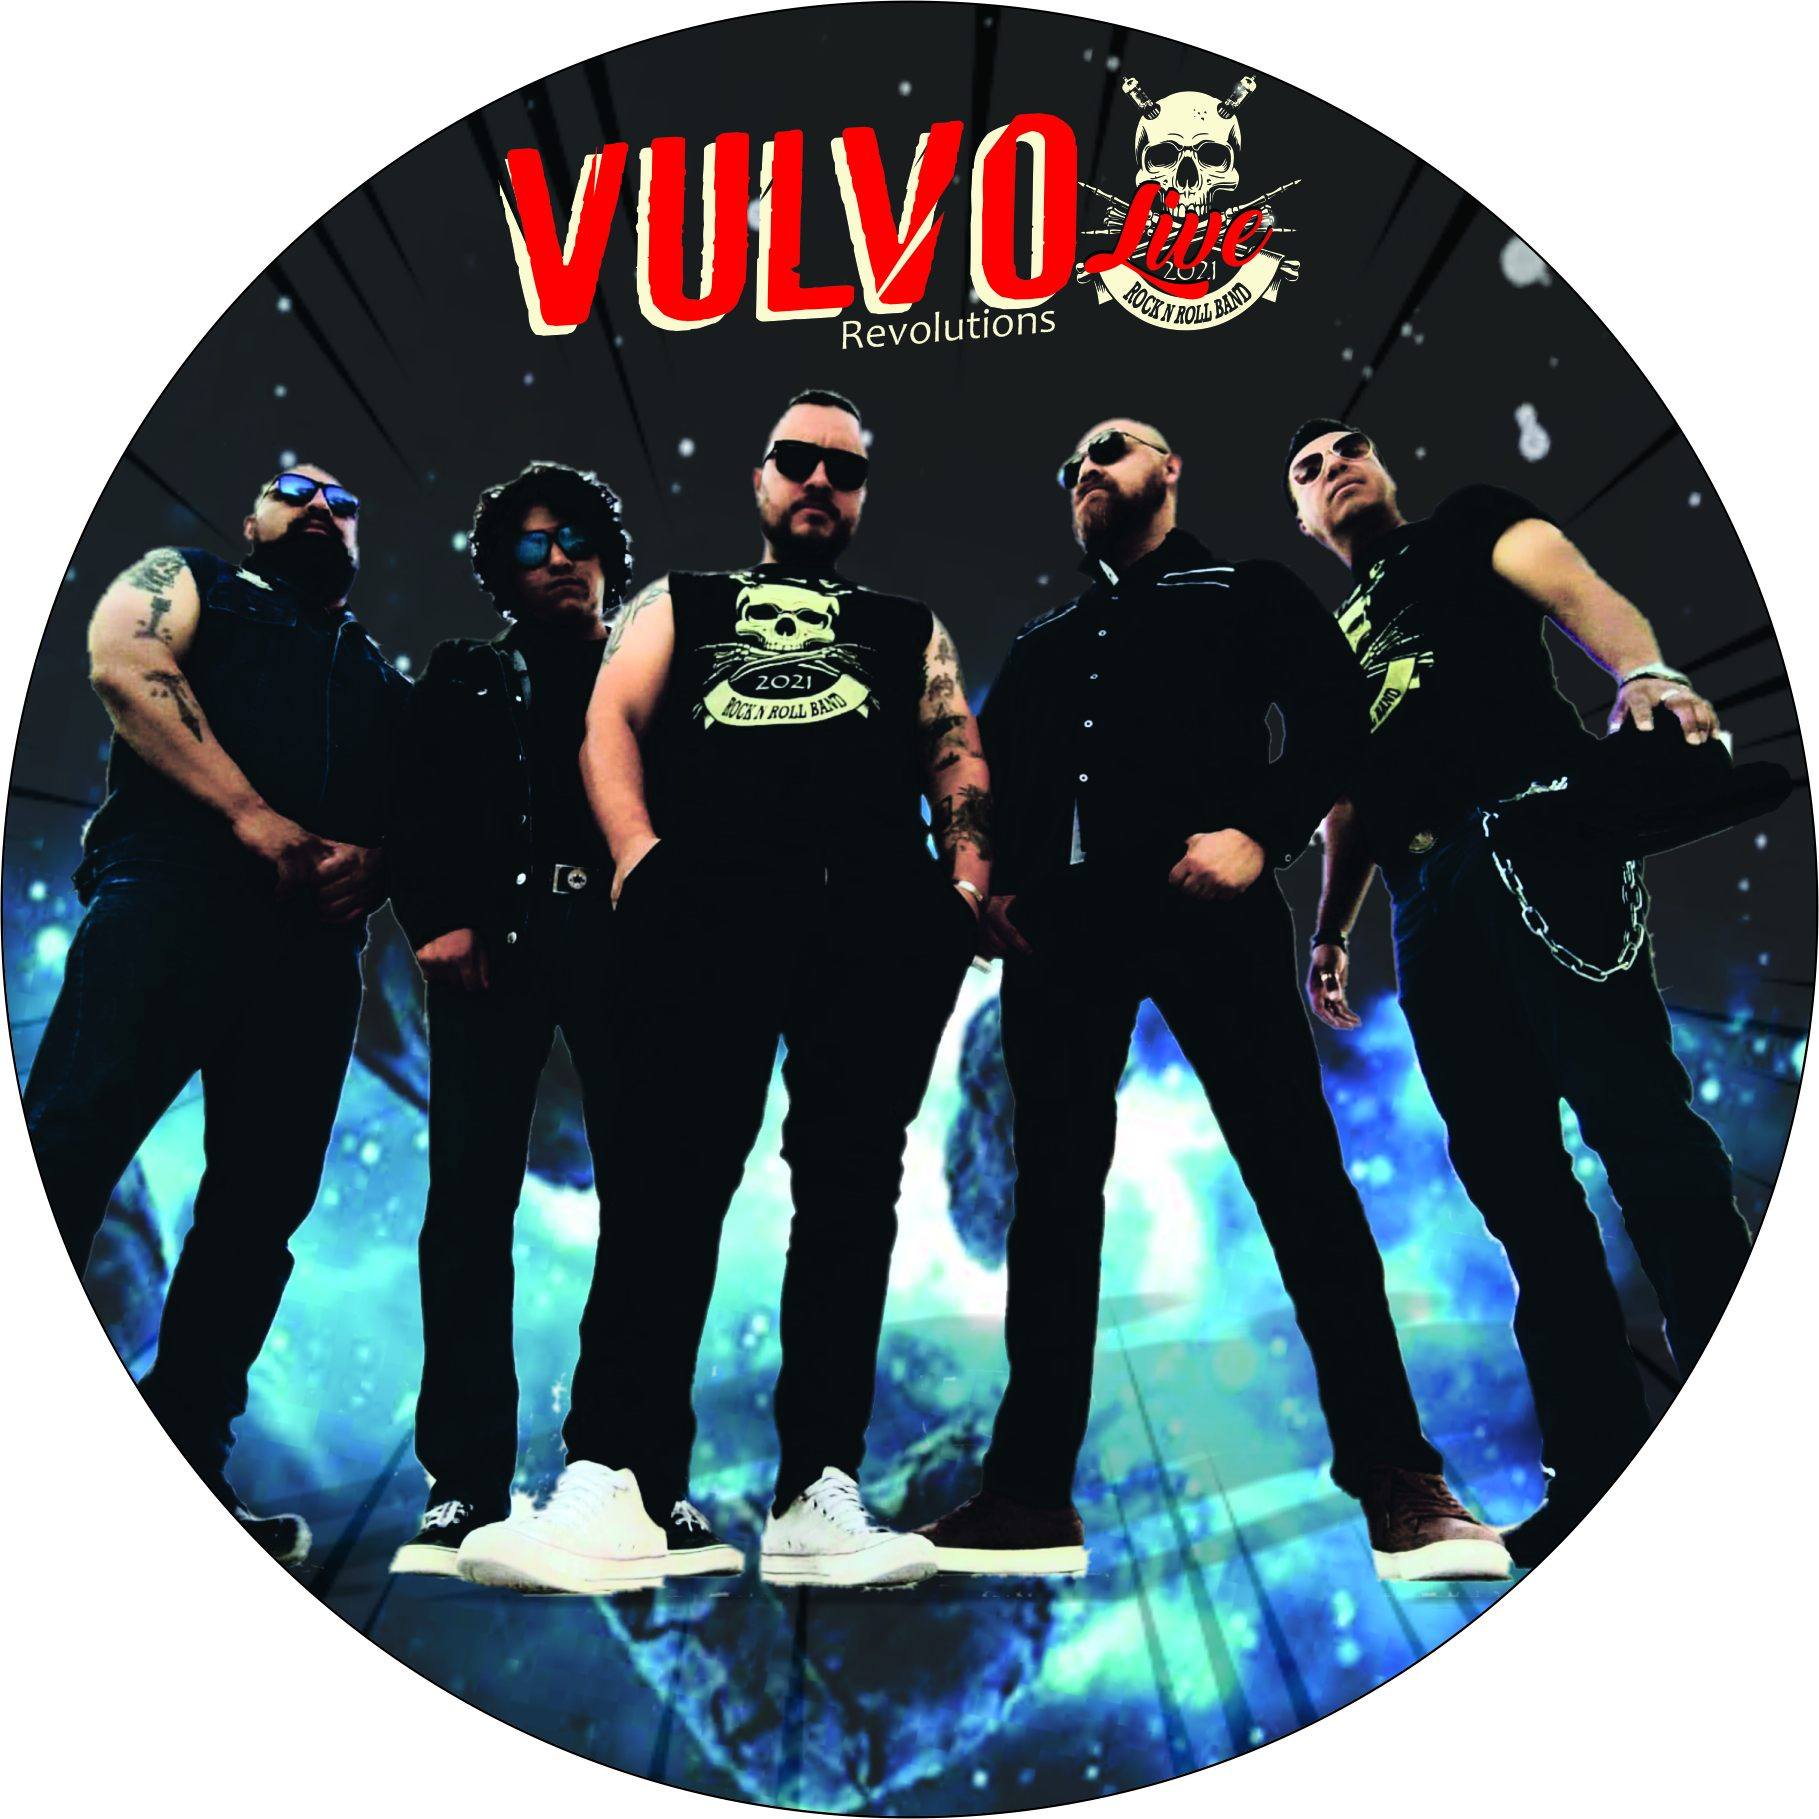 Vulvo "Vulvo" live at Tekila Bar